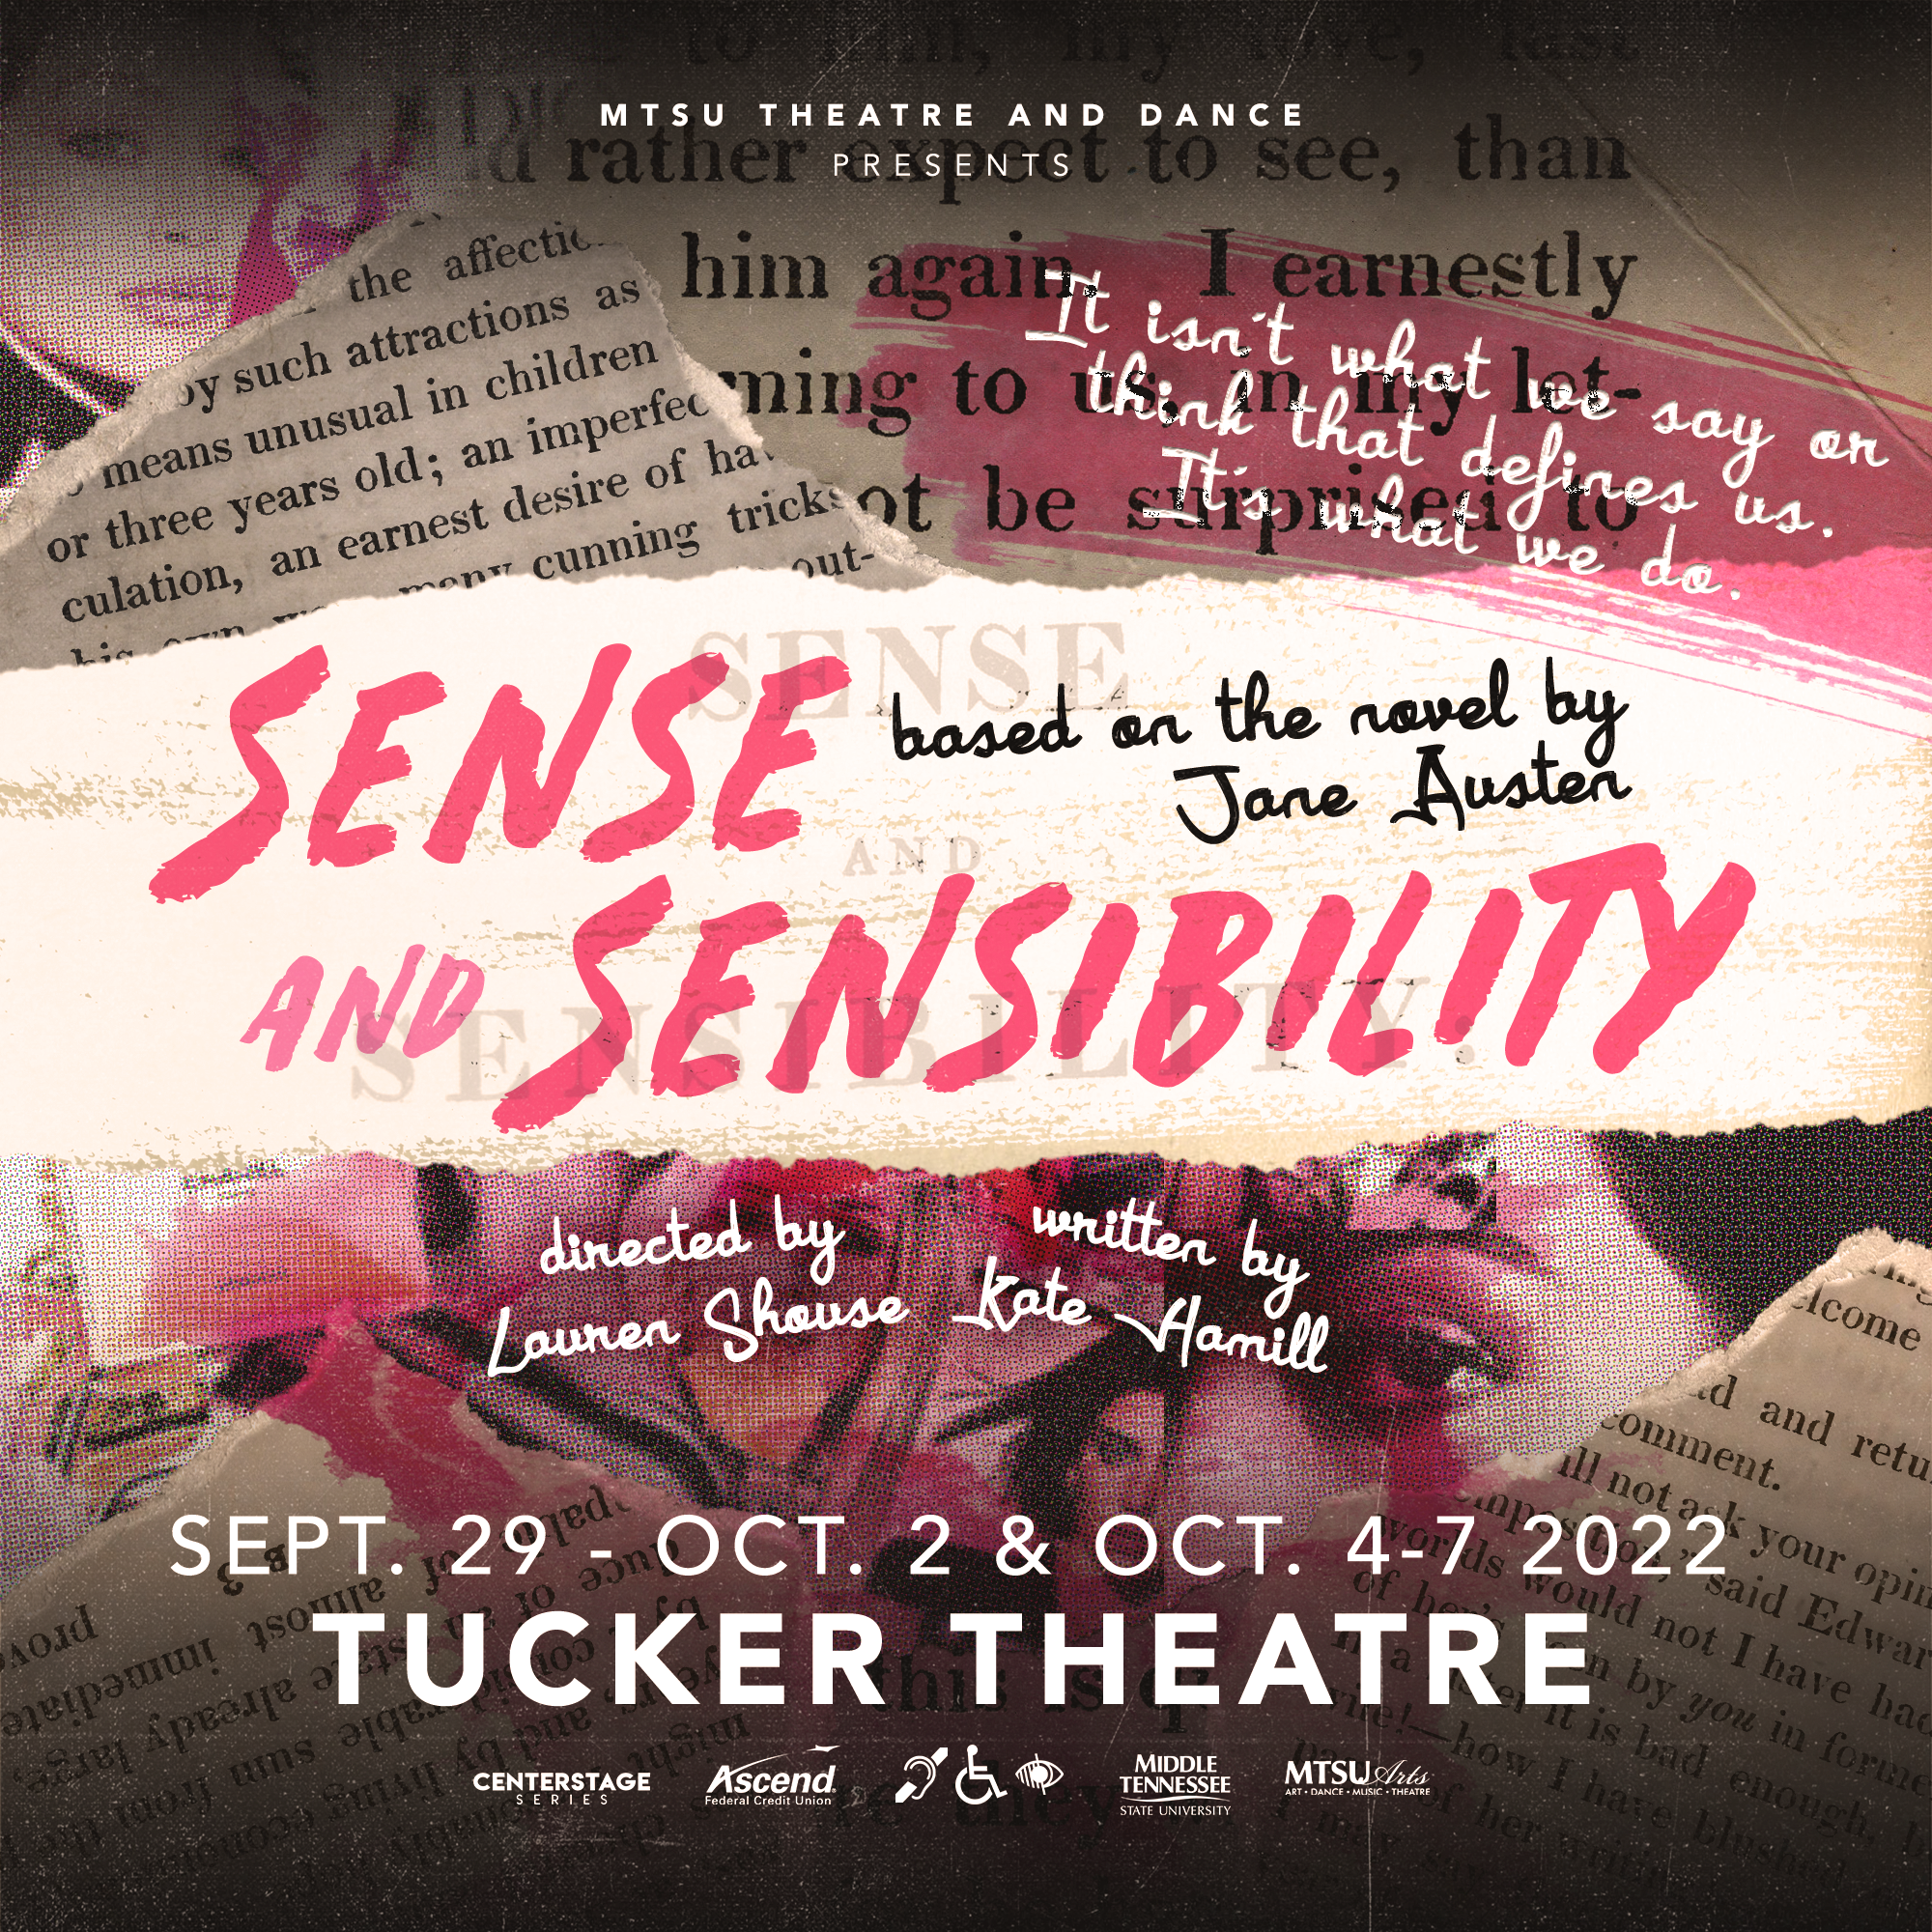 Sense and Sensibility Poster